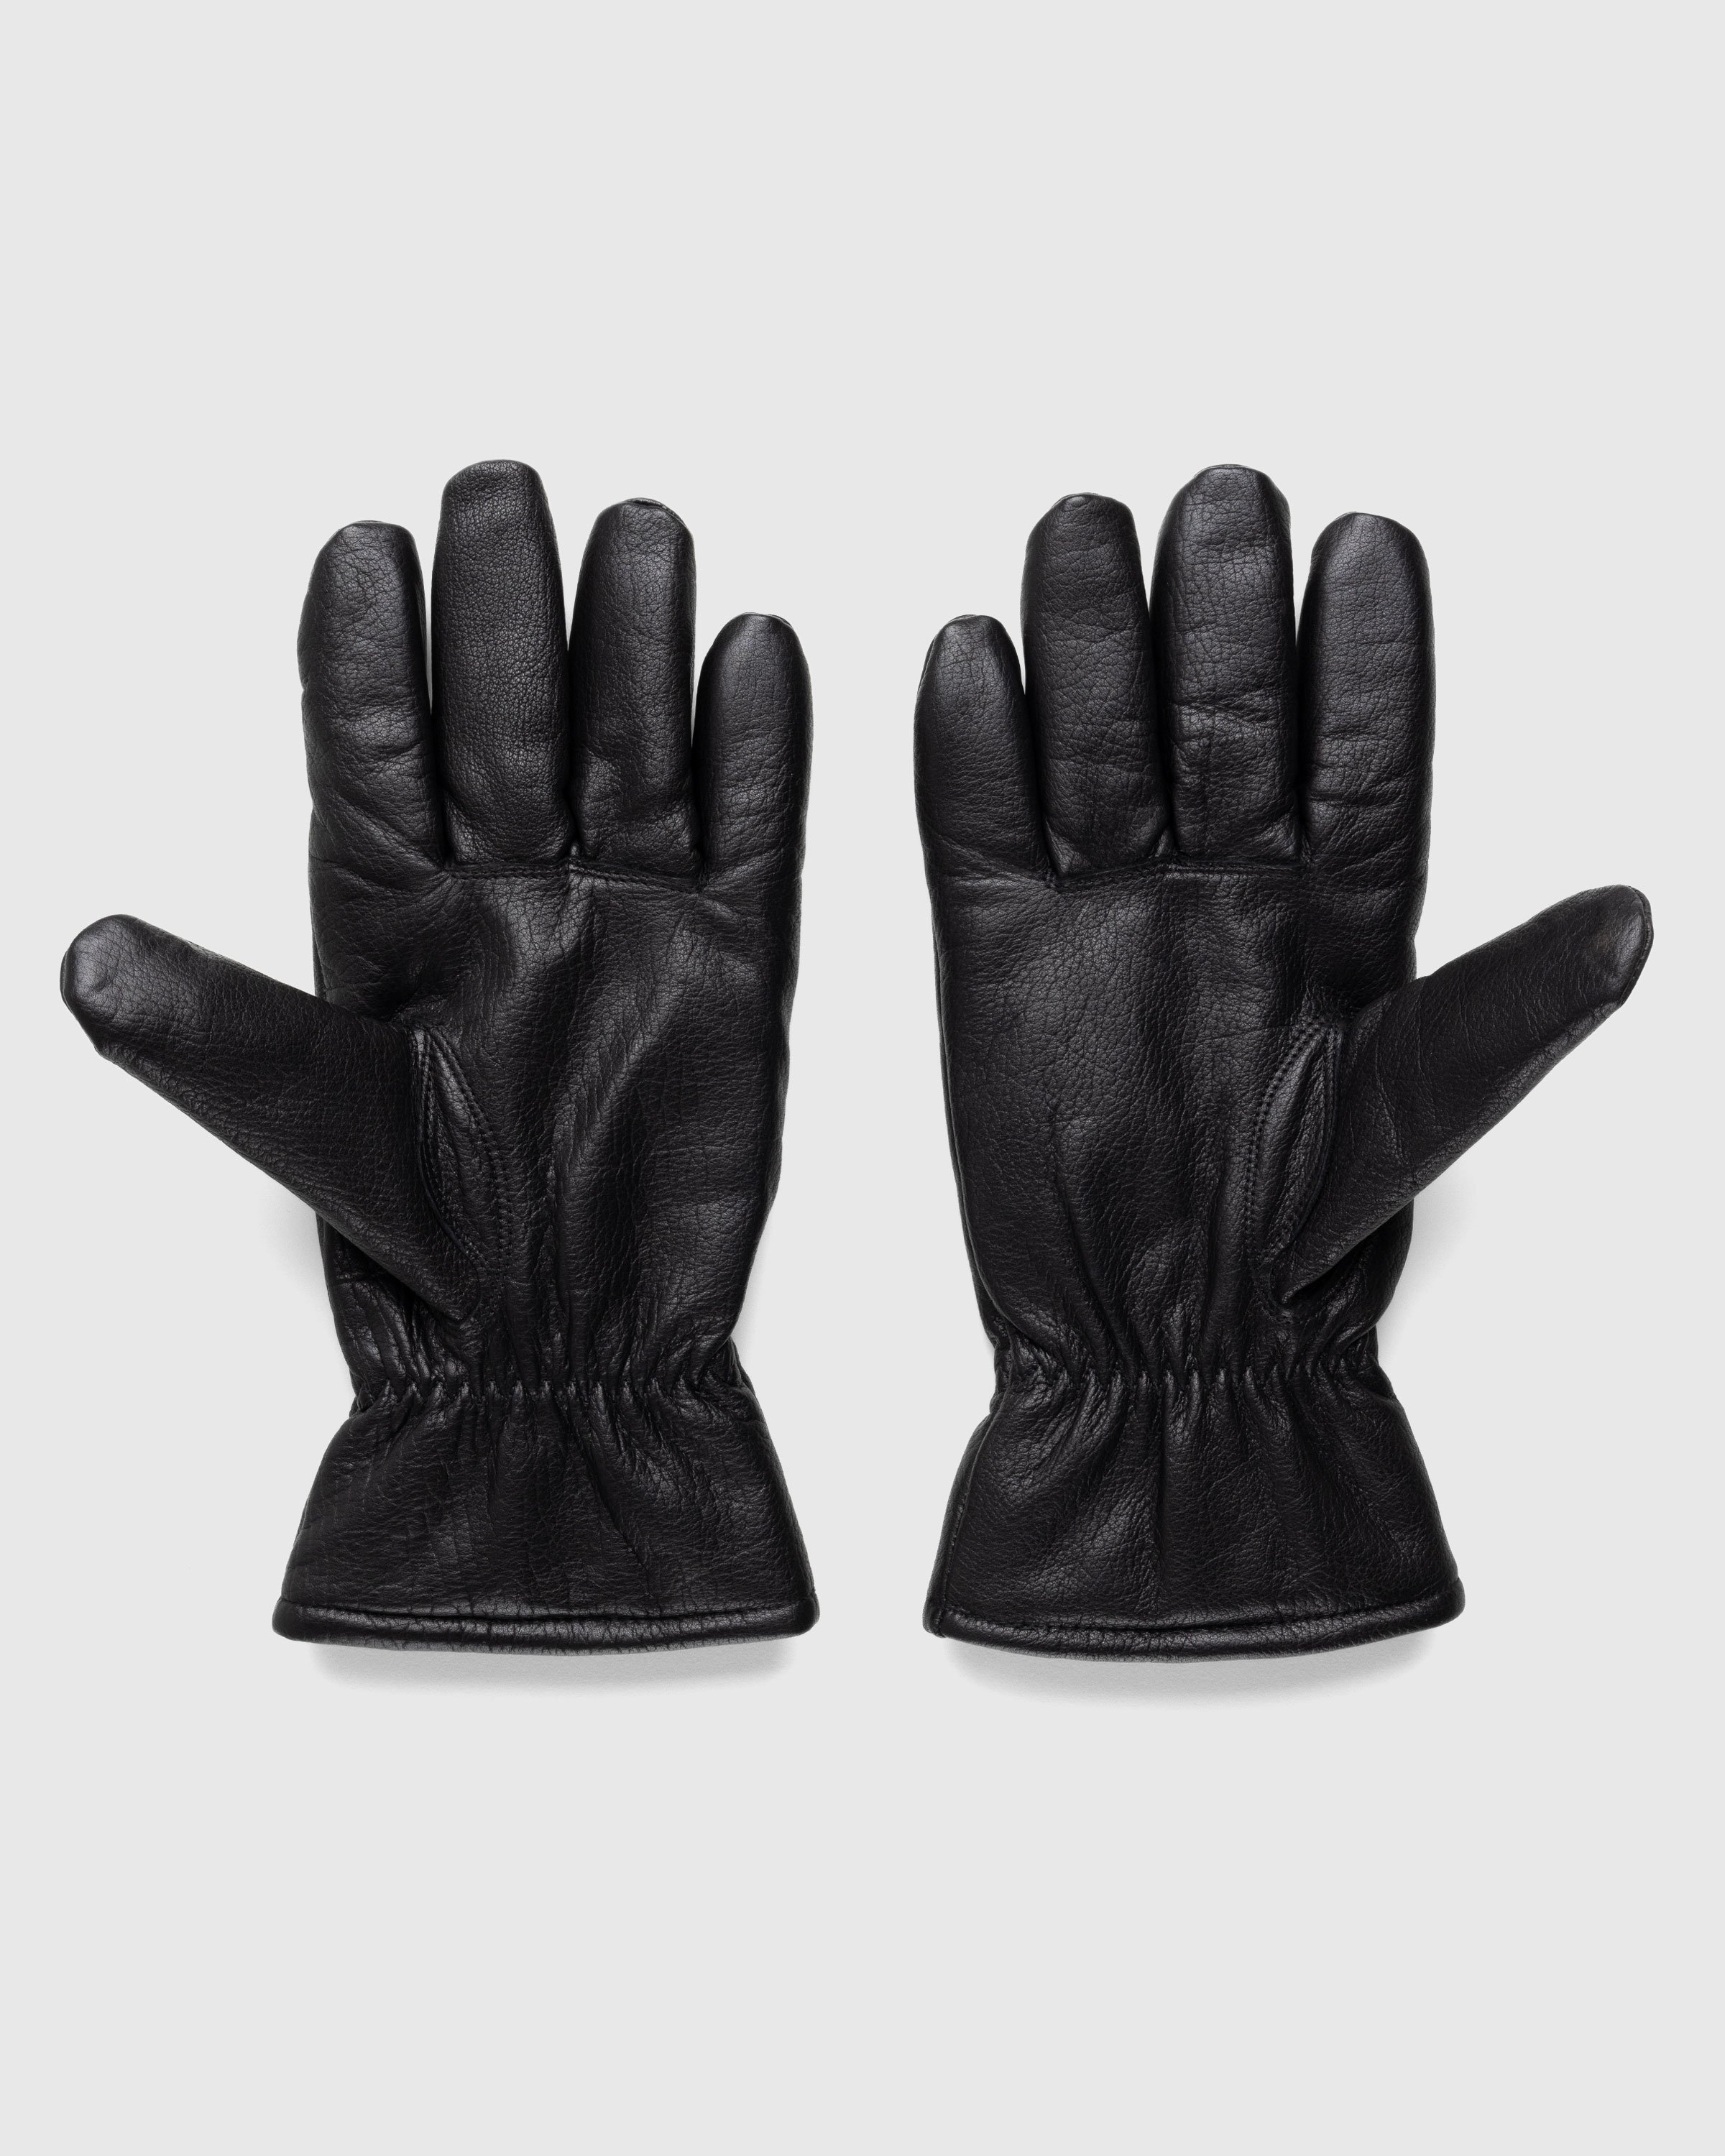 Carhartt WIP - Fonda Gloves Black - Accessories - Black - Image 2